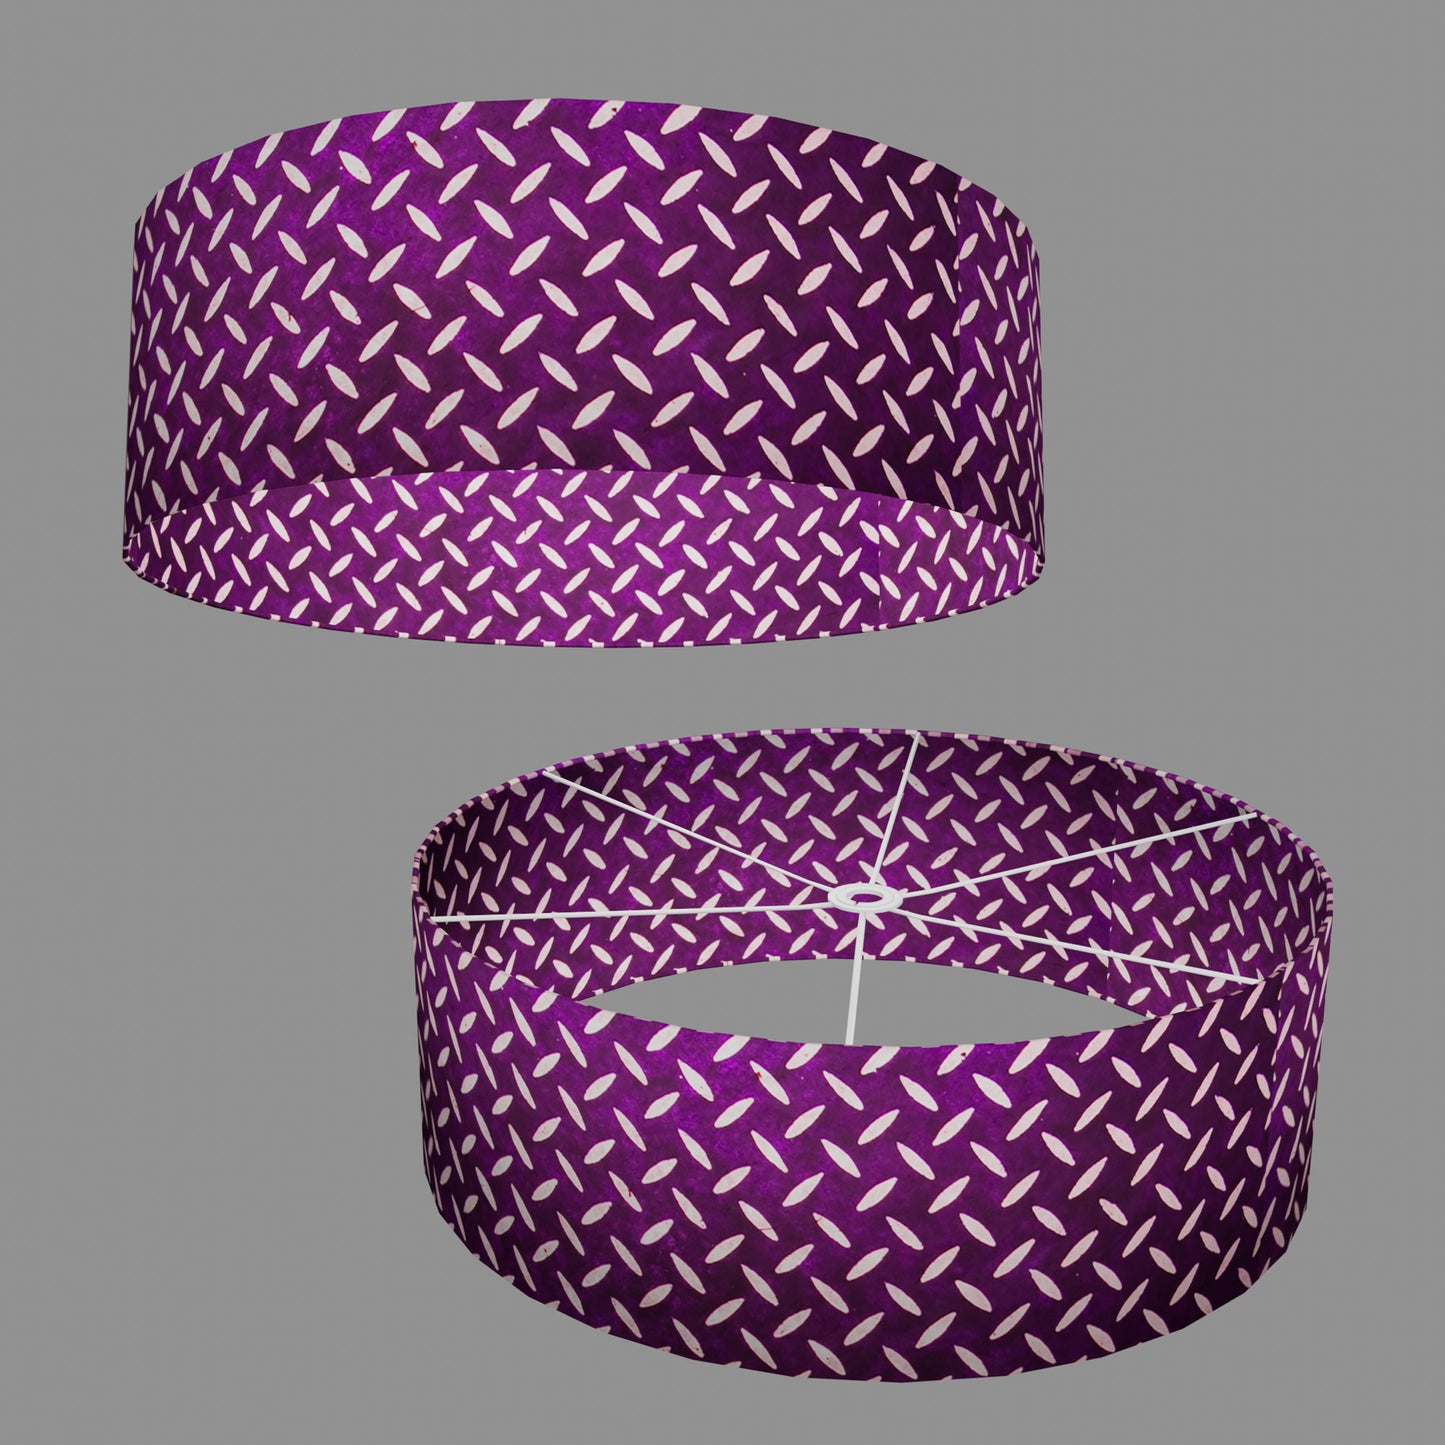 Drum Lamp Shade - P13 - Batik Tread Plate Purple, 60cm(d) x 20cm(h)